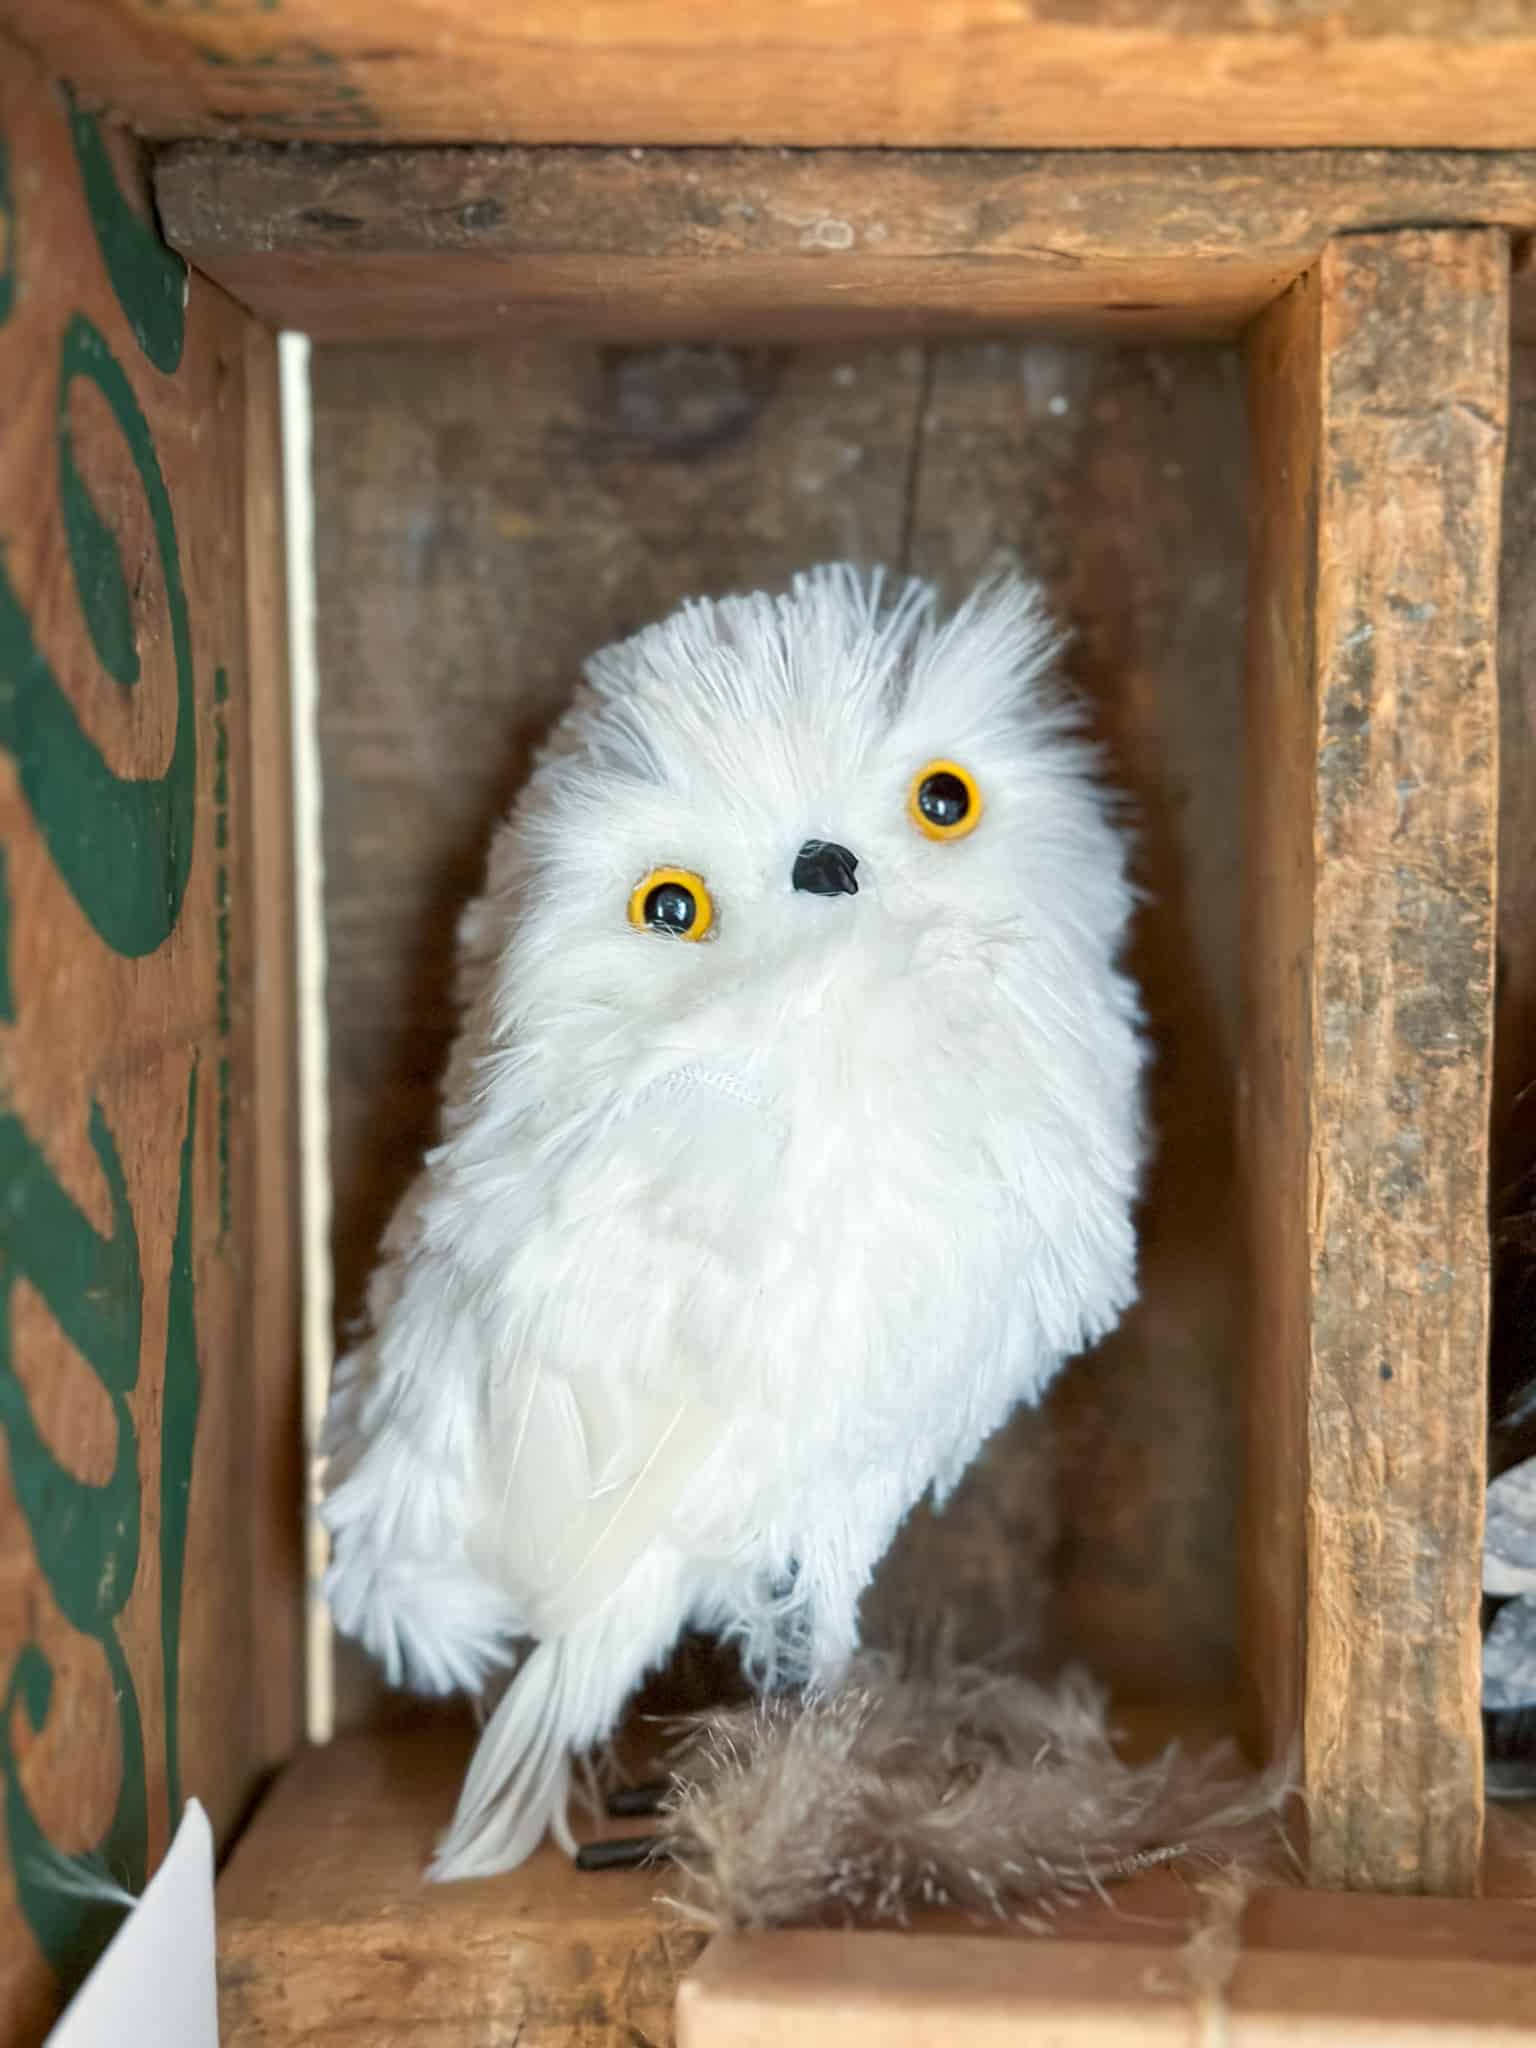 Harry Potter owl posts